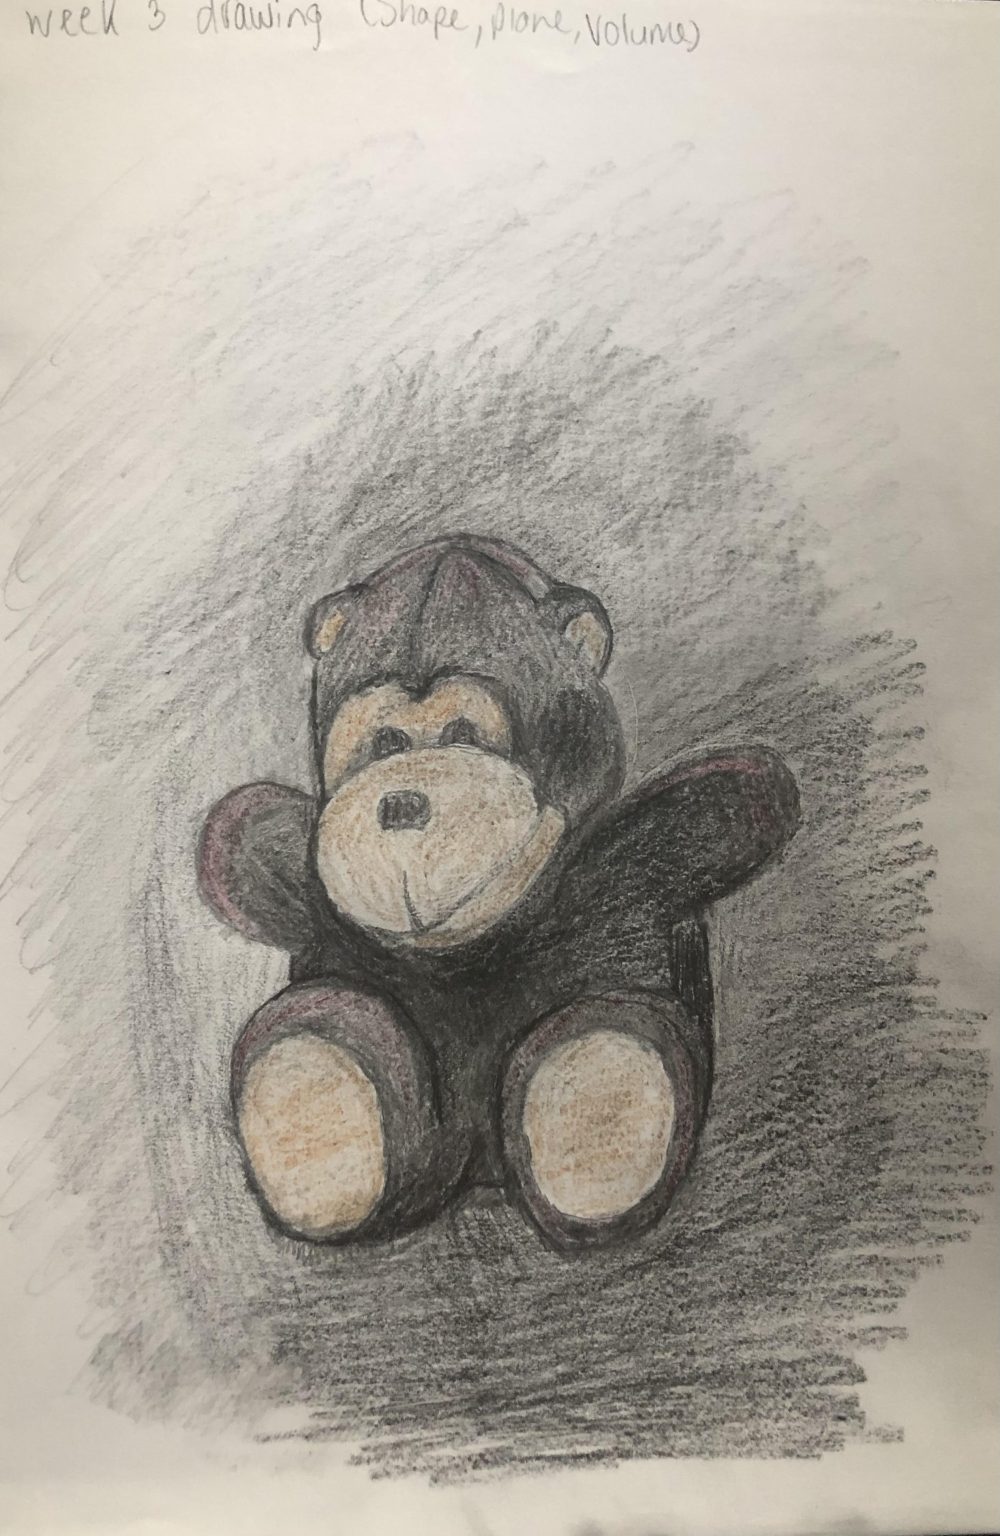 Drawing of a stuffed animal.